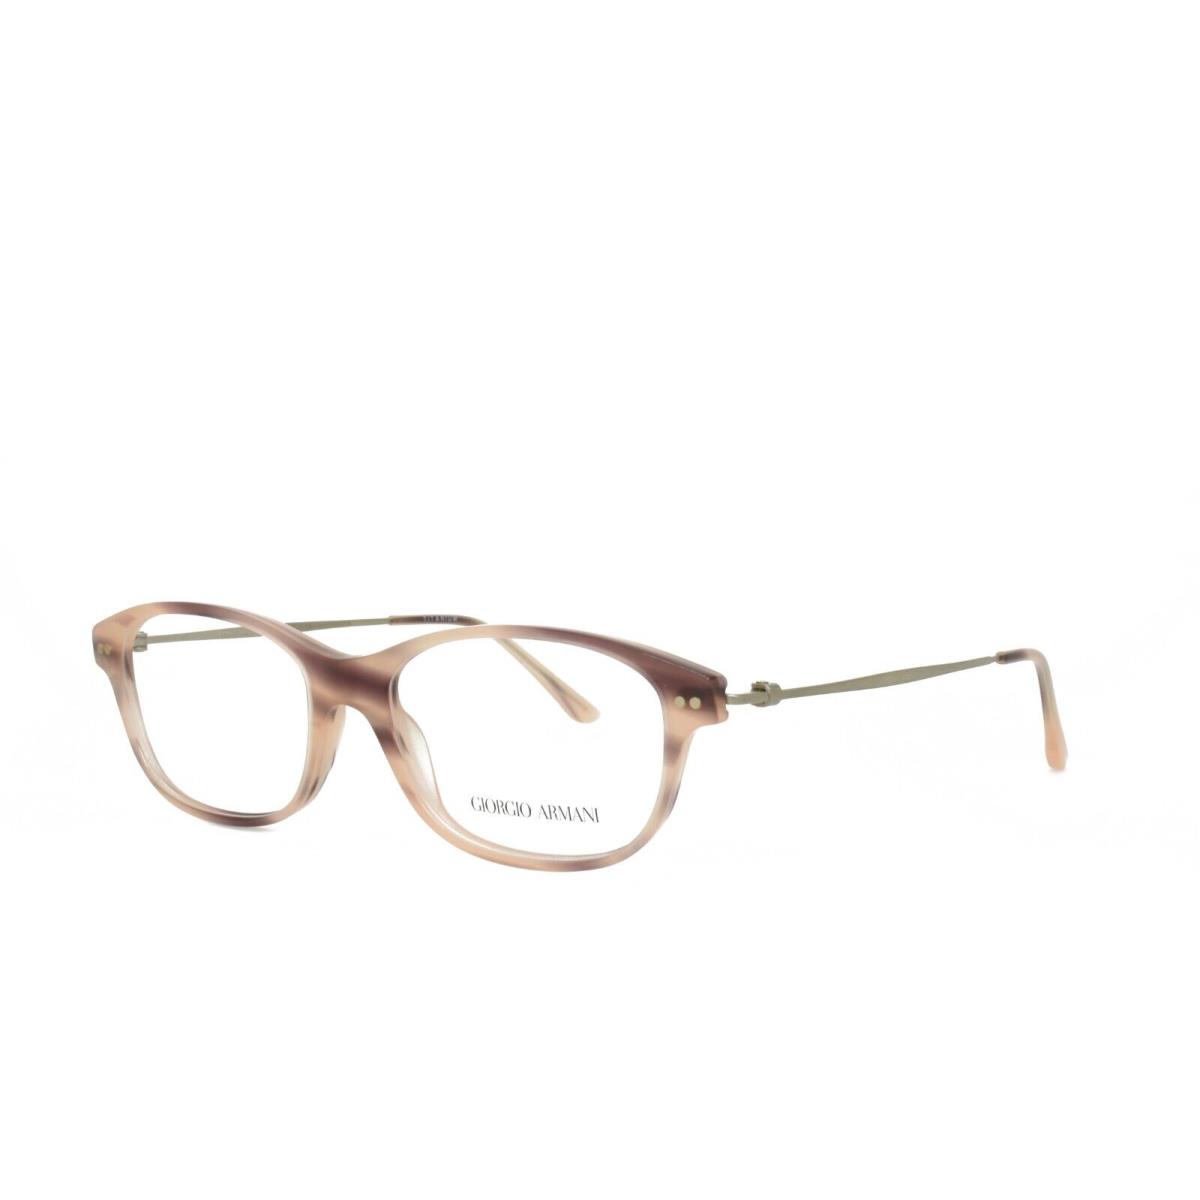 Giorgio Armani 7007 5021 52-16-135 Pink Ivory Eyeglasses Frames